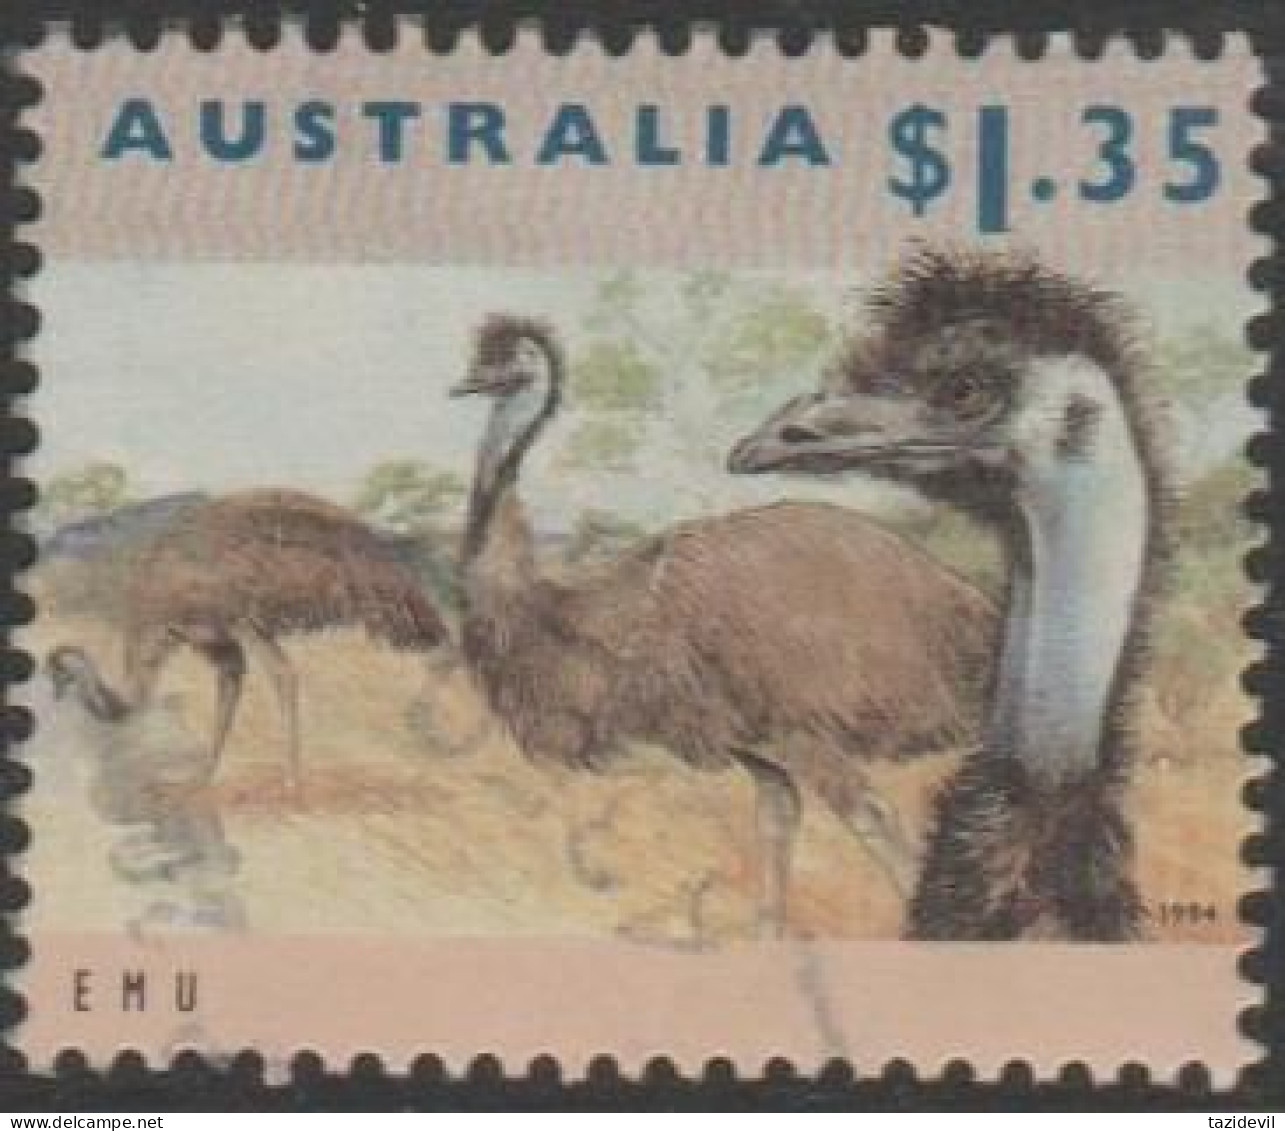 AUSTRALIA - USED 1994 $1.35 Wildlife - Emu - Bird - Usati